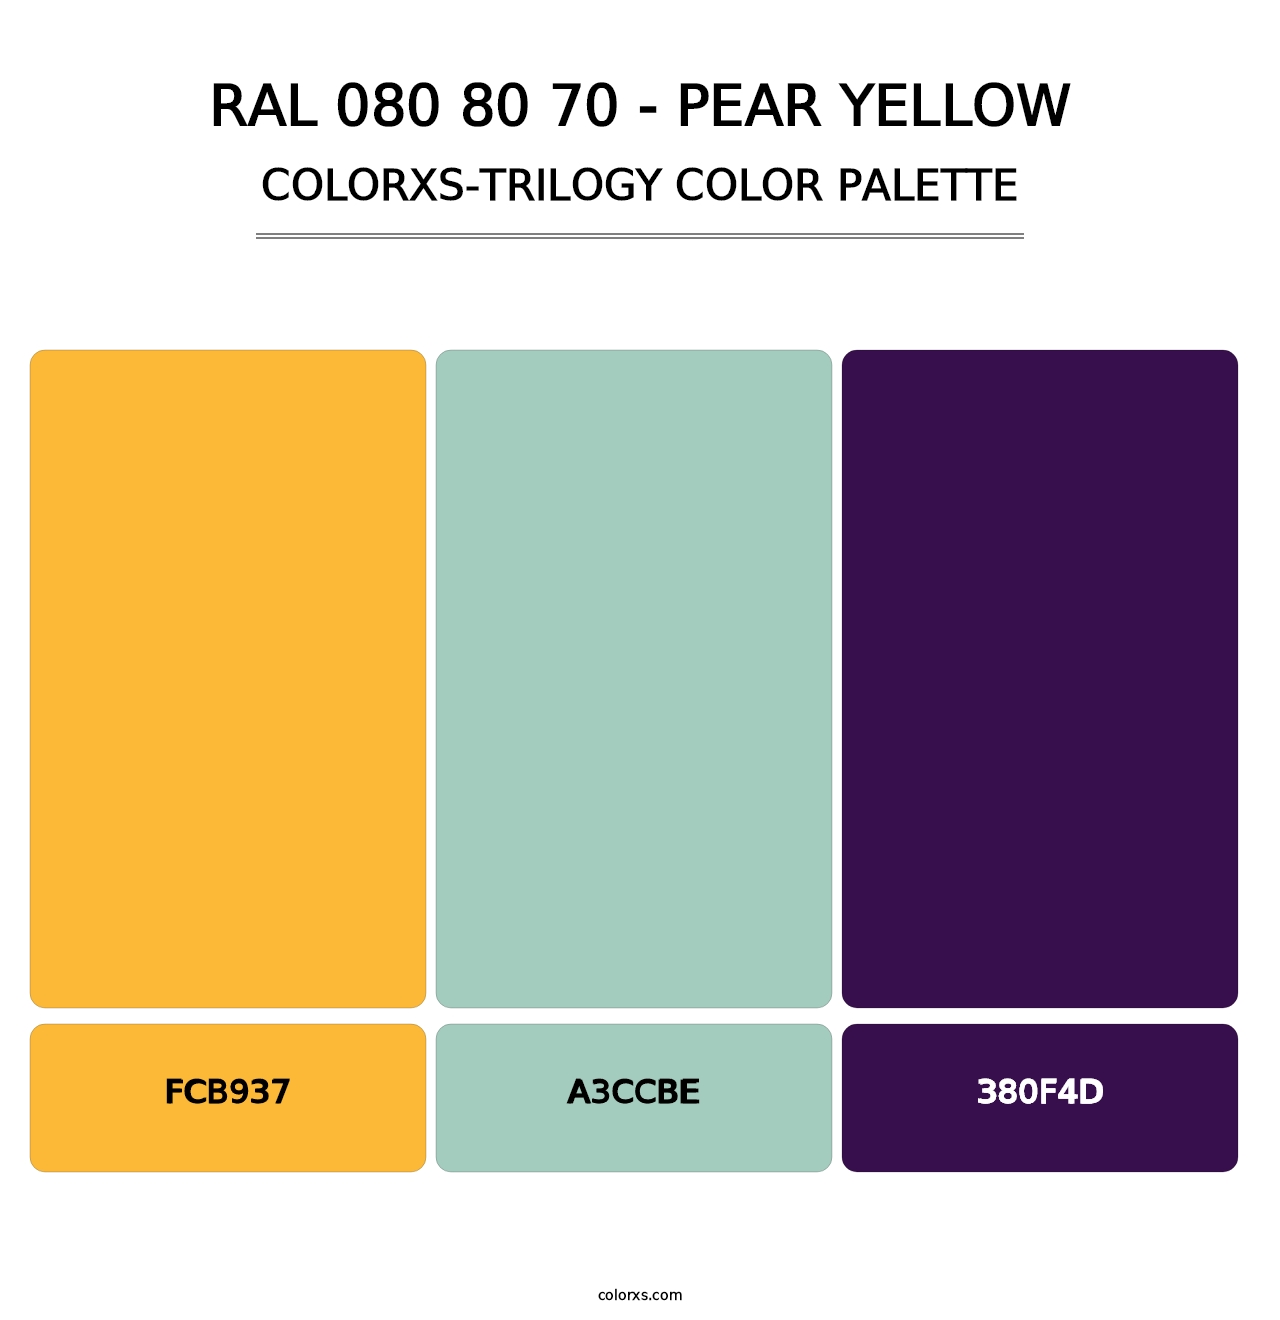 RAL 080 80 70 - Pear Yellow - Colorxs Trilogy Palette